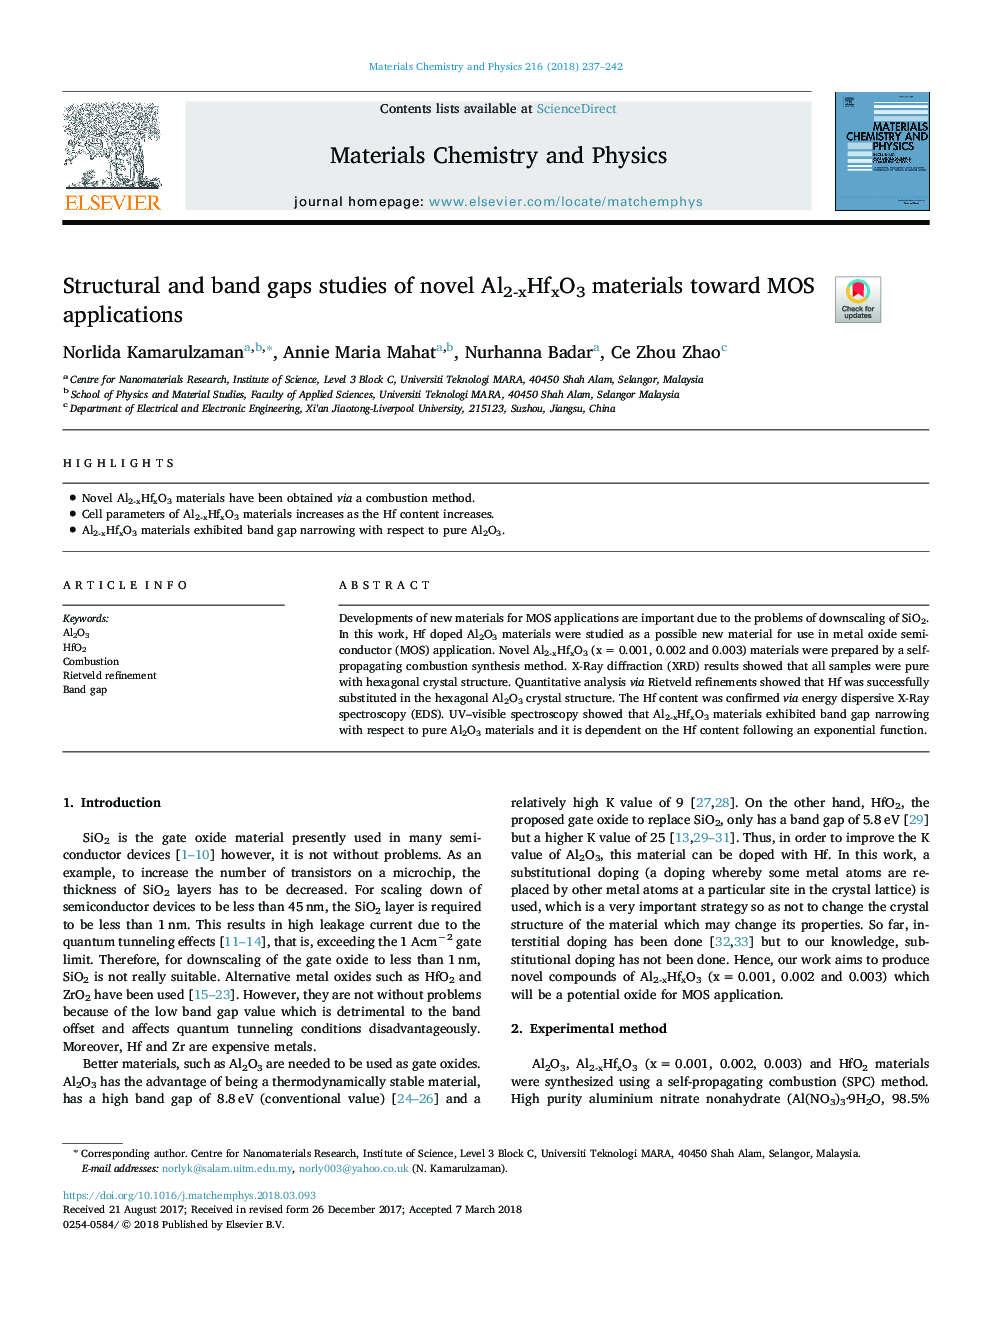 Structural and band gaps studies of novel Al2-xHfxO3 materials toward MOS applications